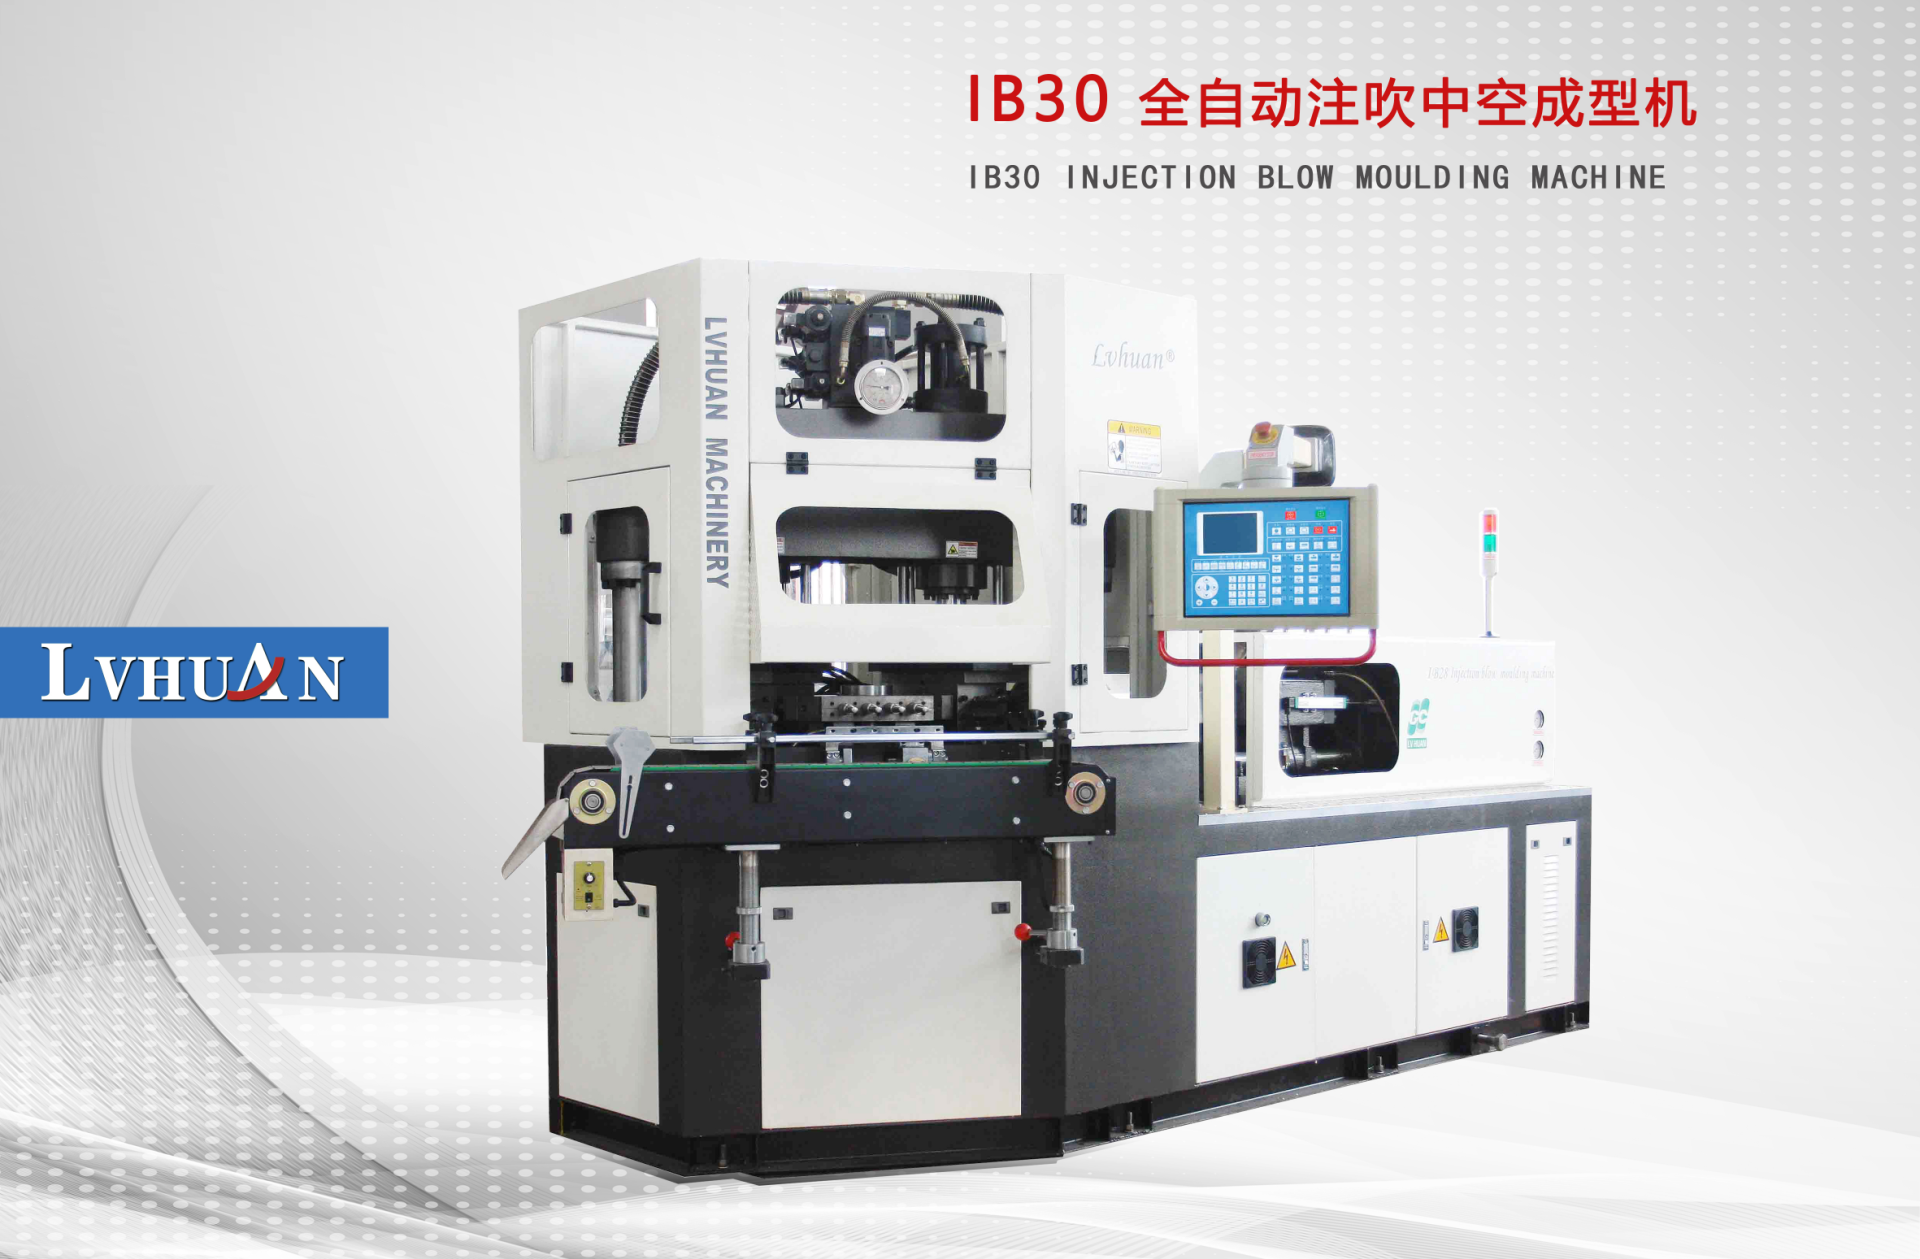 IB30 Injection blow moulding machine